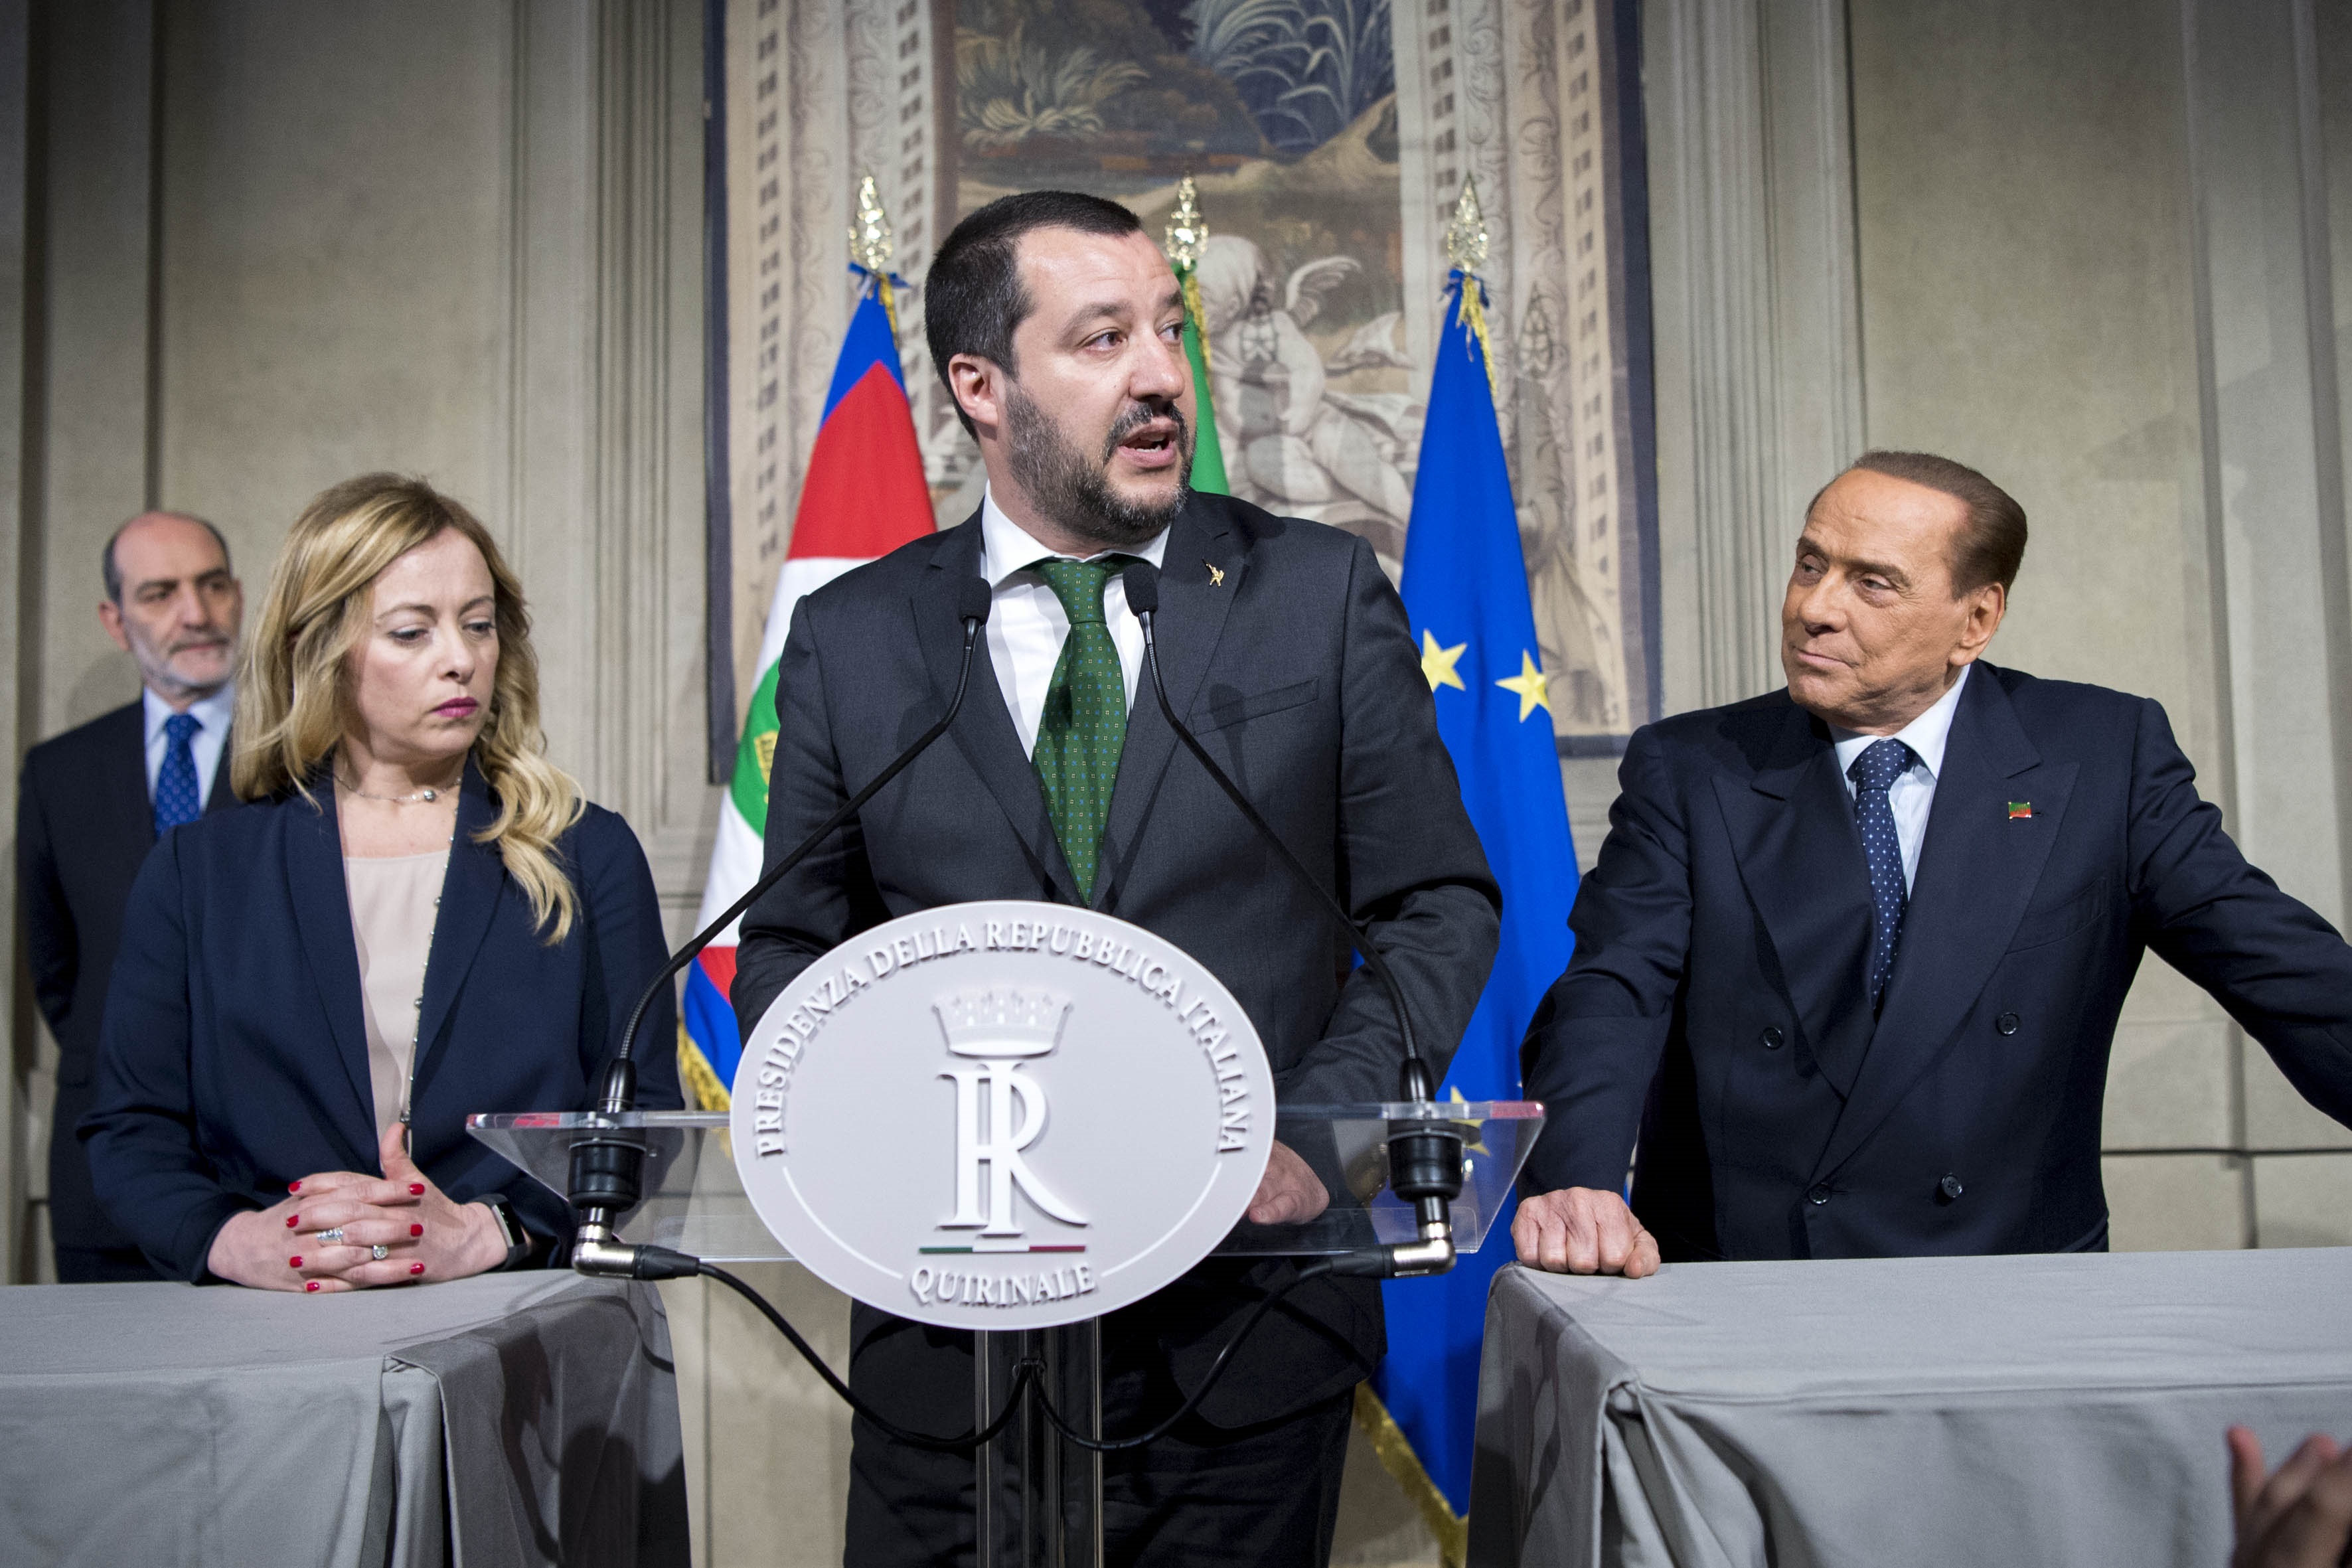 Giorgia Meloni en 2018 aux côtés de ses alliés, Matteo Salvini et Silvio Berlusconi. (Presidenza della Repubblica)